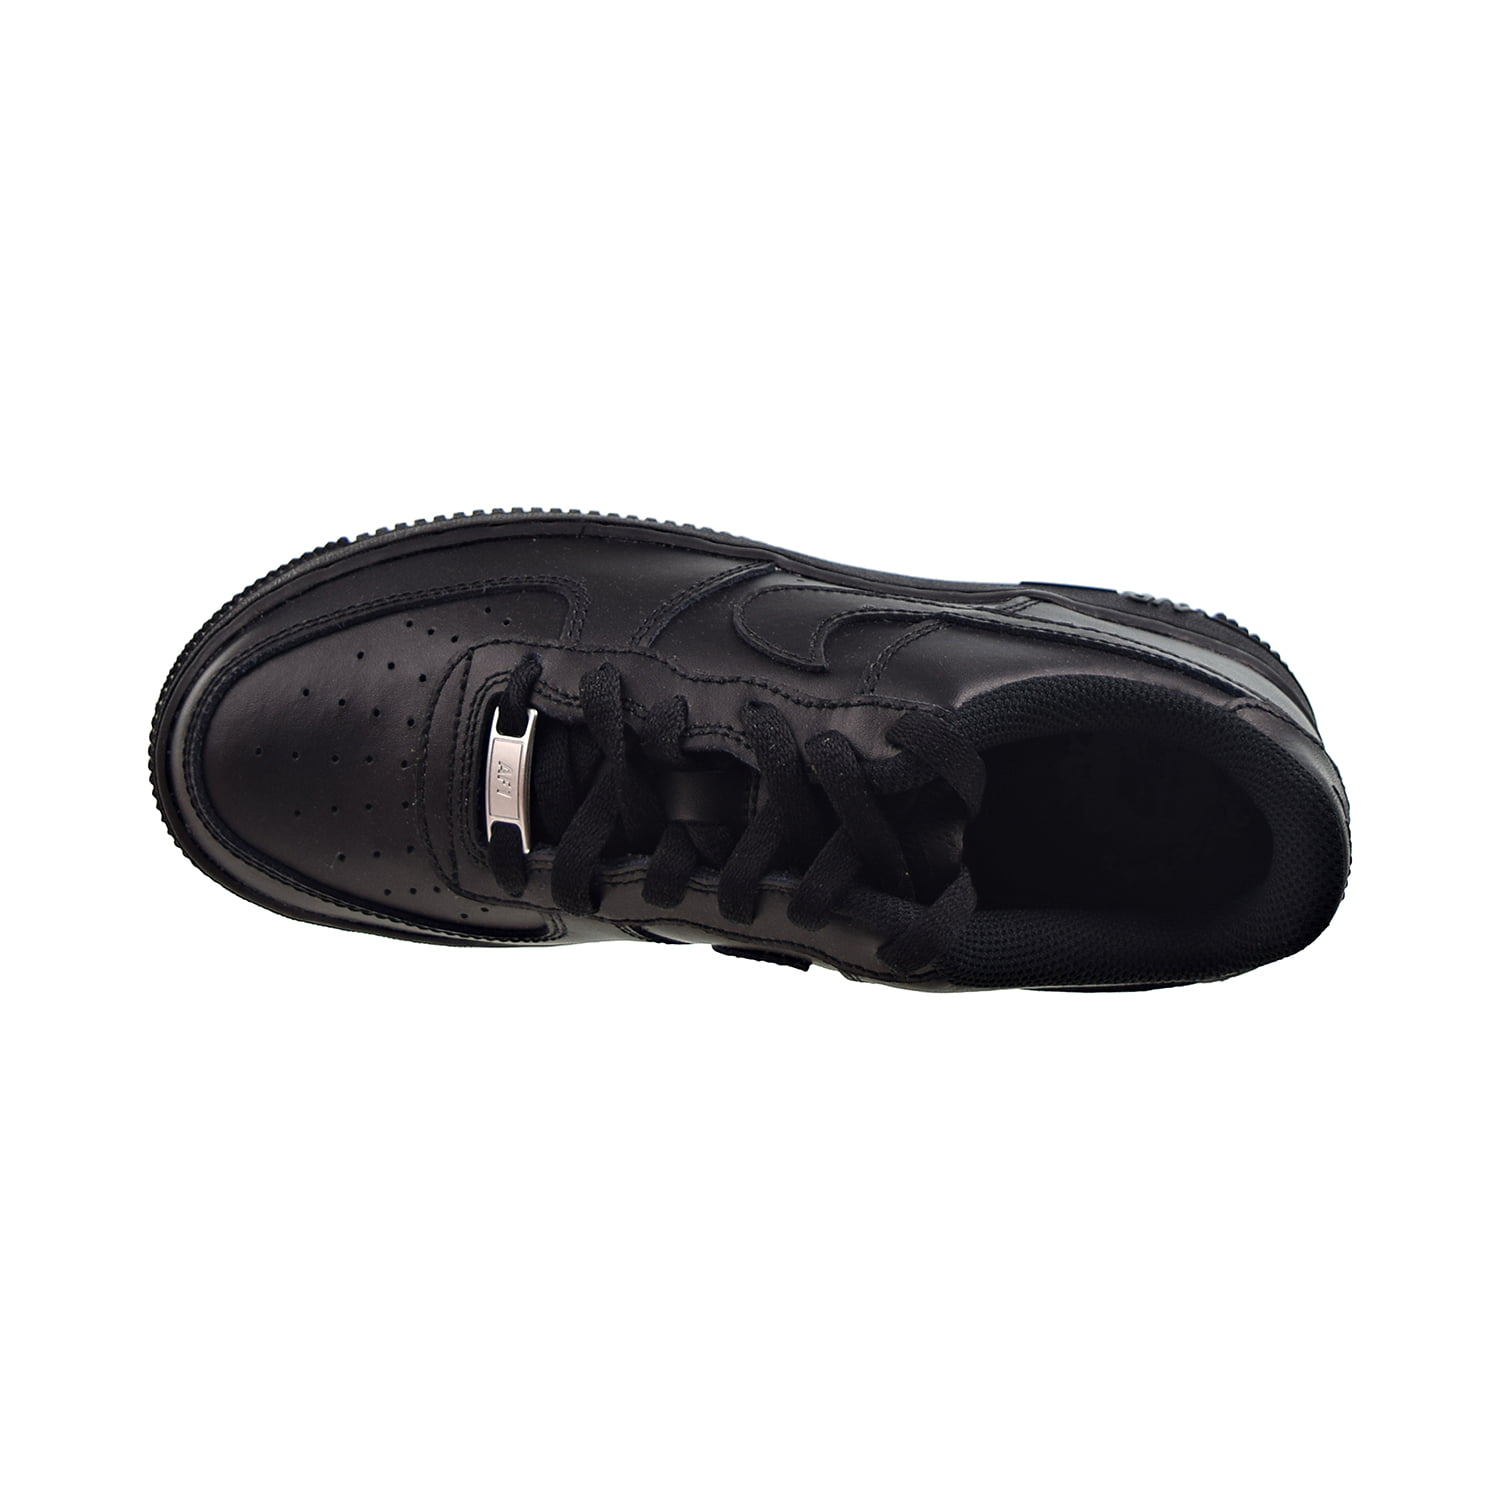 Buy Nike Air Force 1 (GS) Big Kids' Fashion Shoes Black/Hasta/Stadium Green  Black/Hasta Stdm Green 314192-079-5.5 at